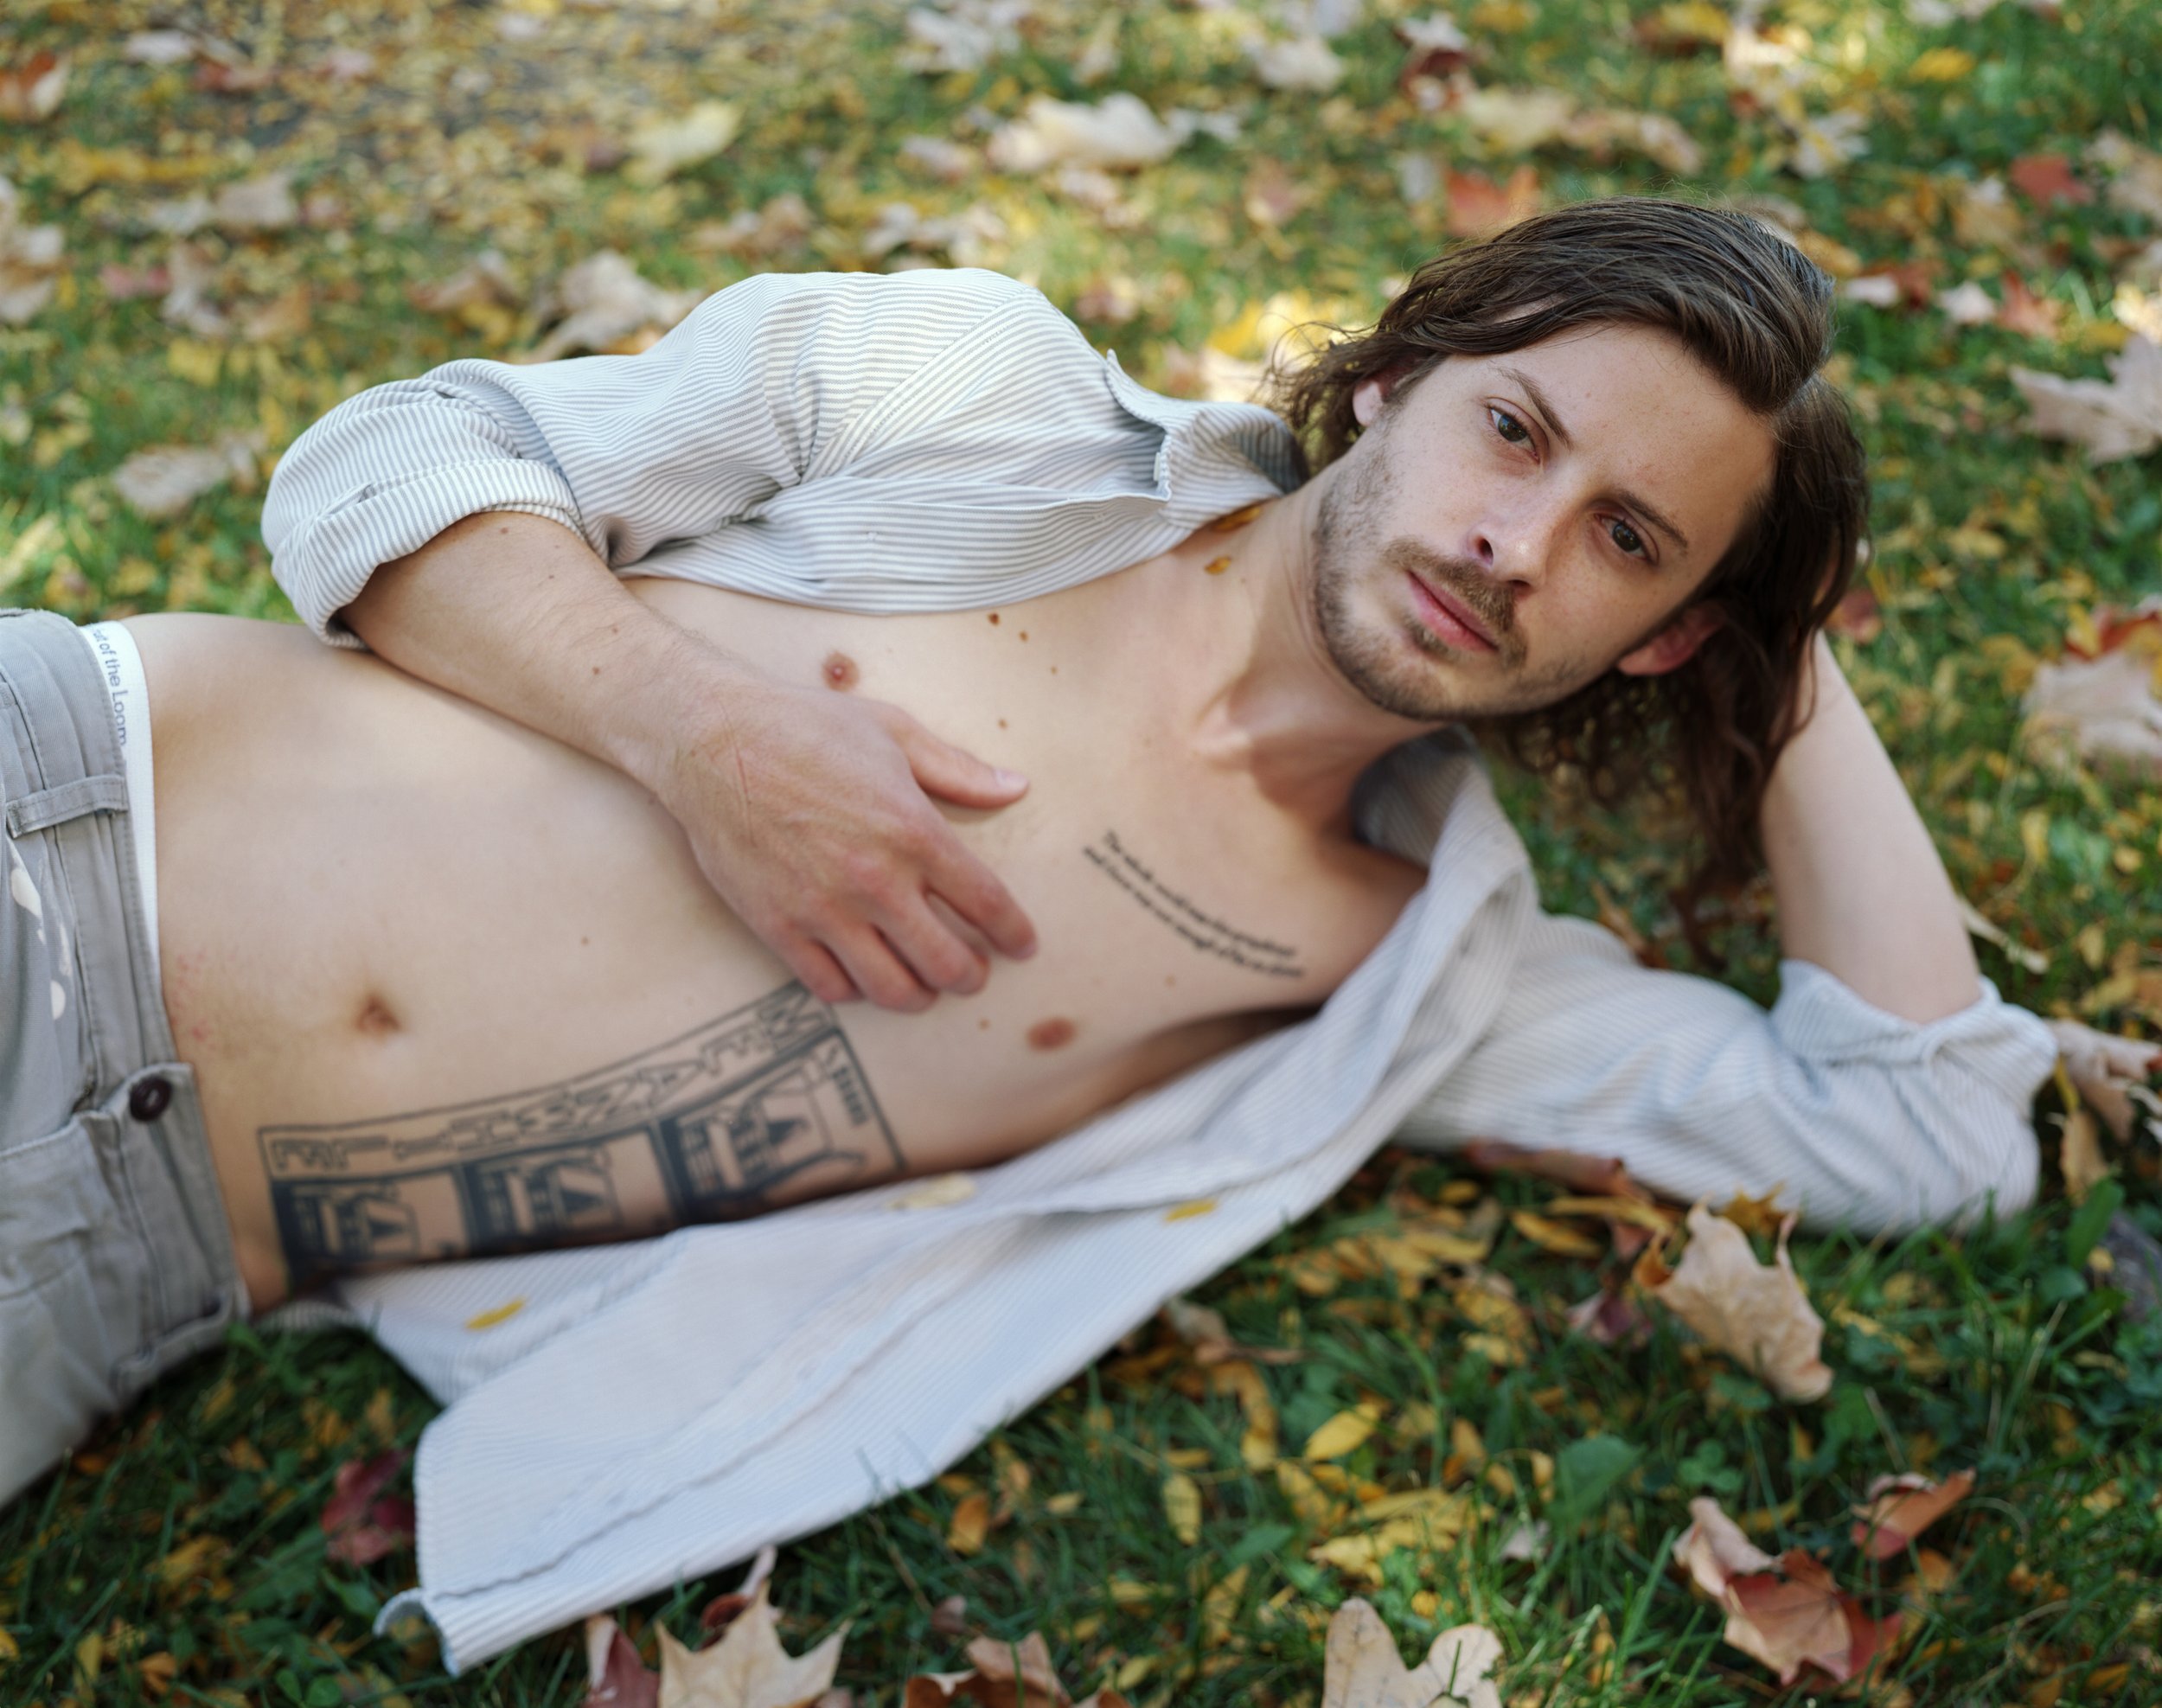  Gregg lying in the grass, 2011 